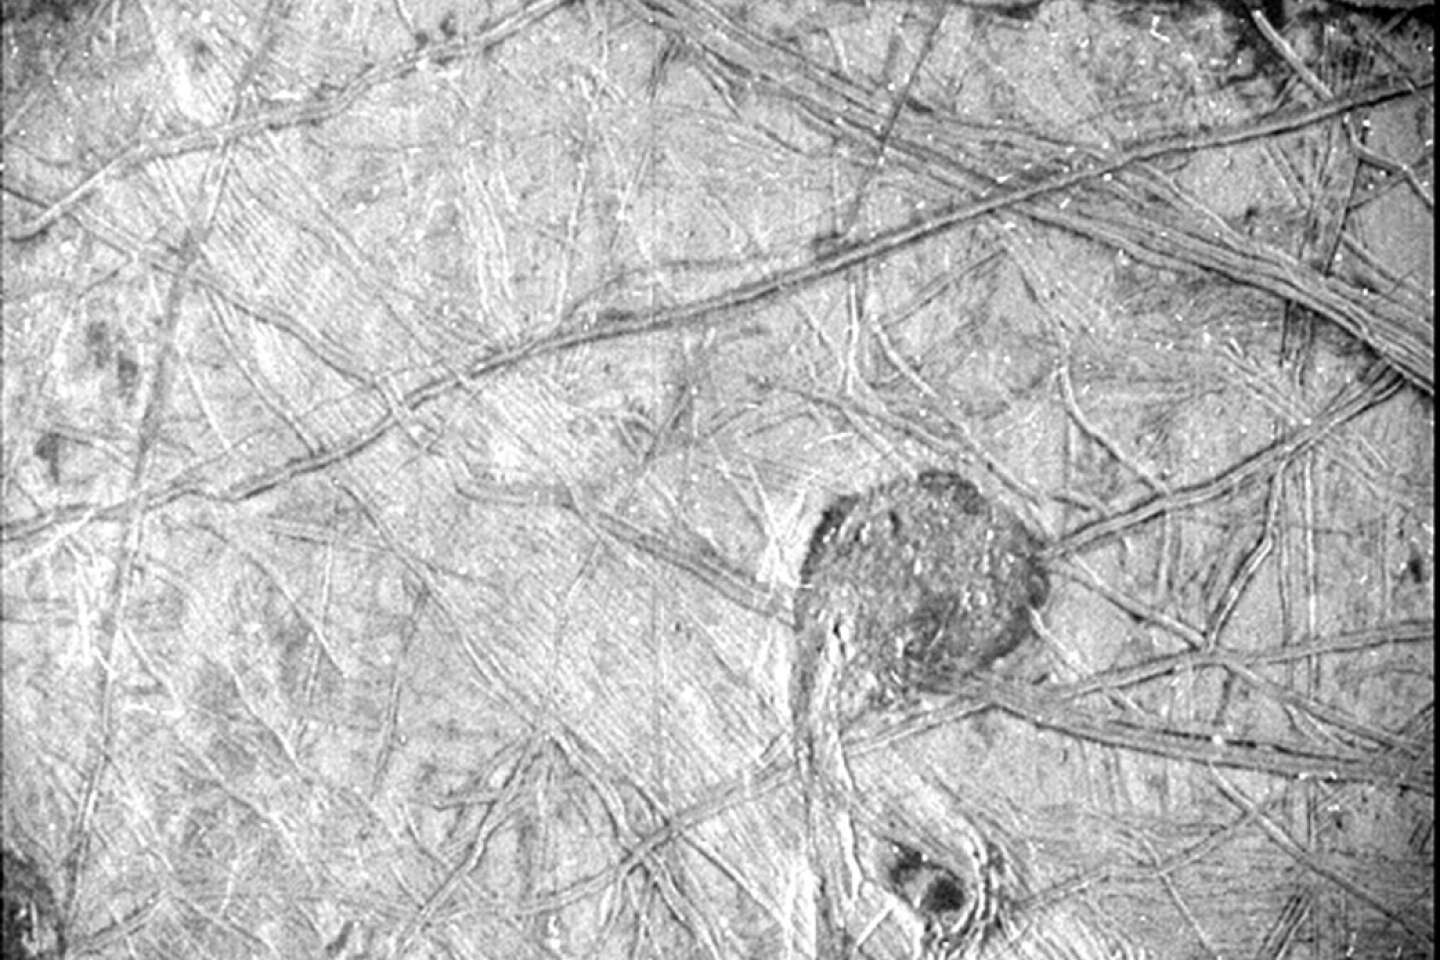 Junos Sonde flog über Europa, den Hauptmond des Jupiter